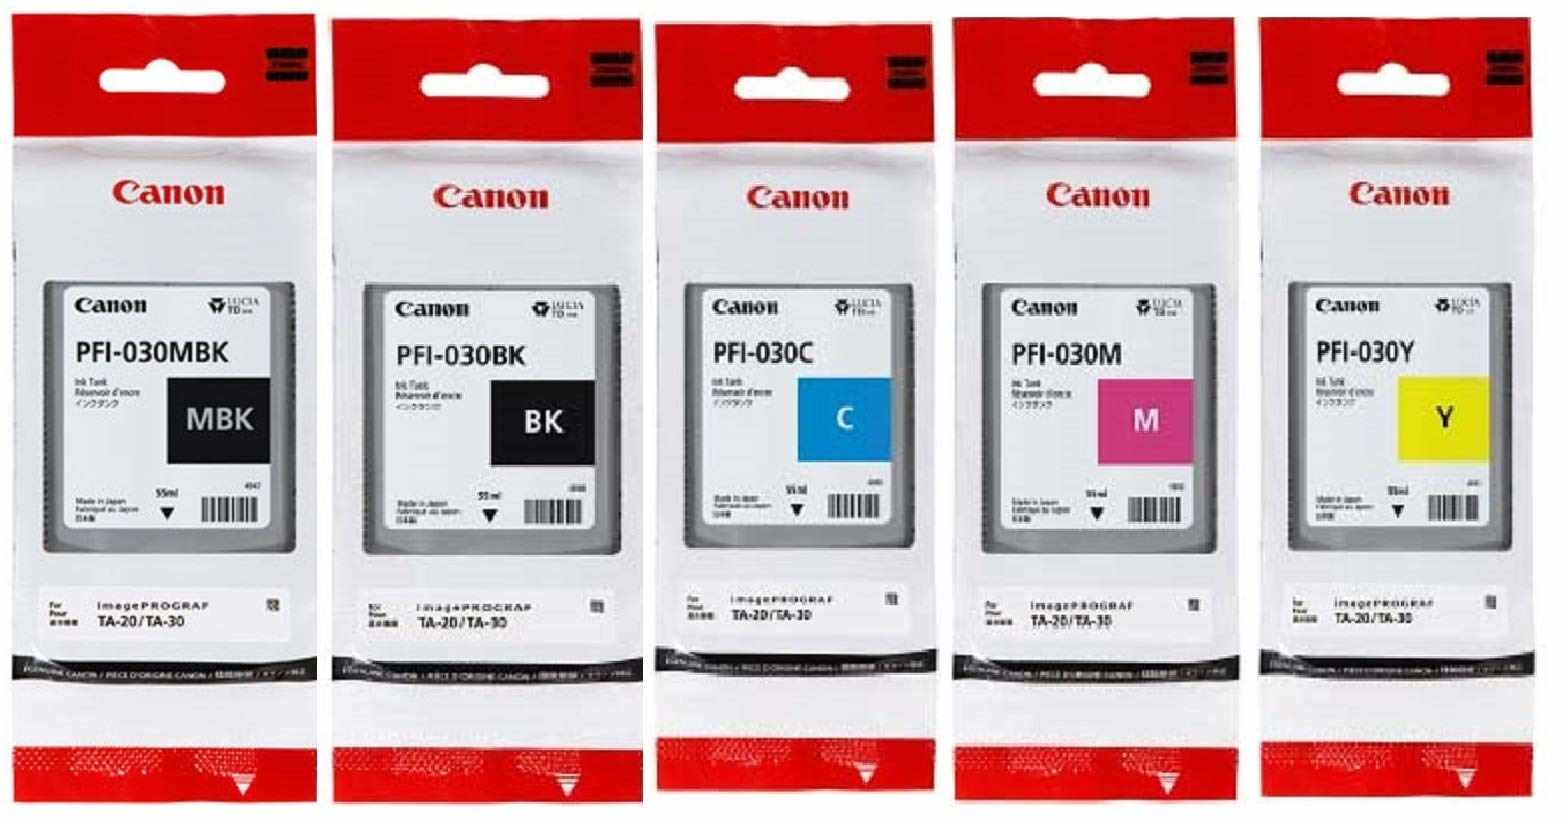 Canon CARTRIDGE PFI-031 M purpurová pro imagePROGRAF TM-240 a TM-3400 